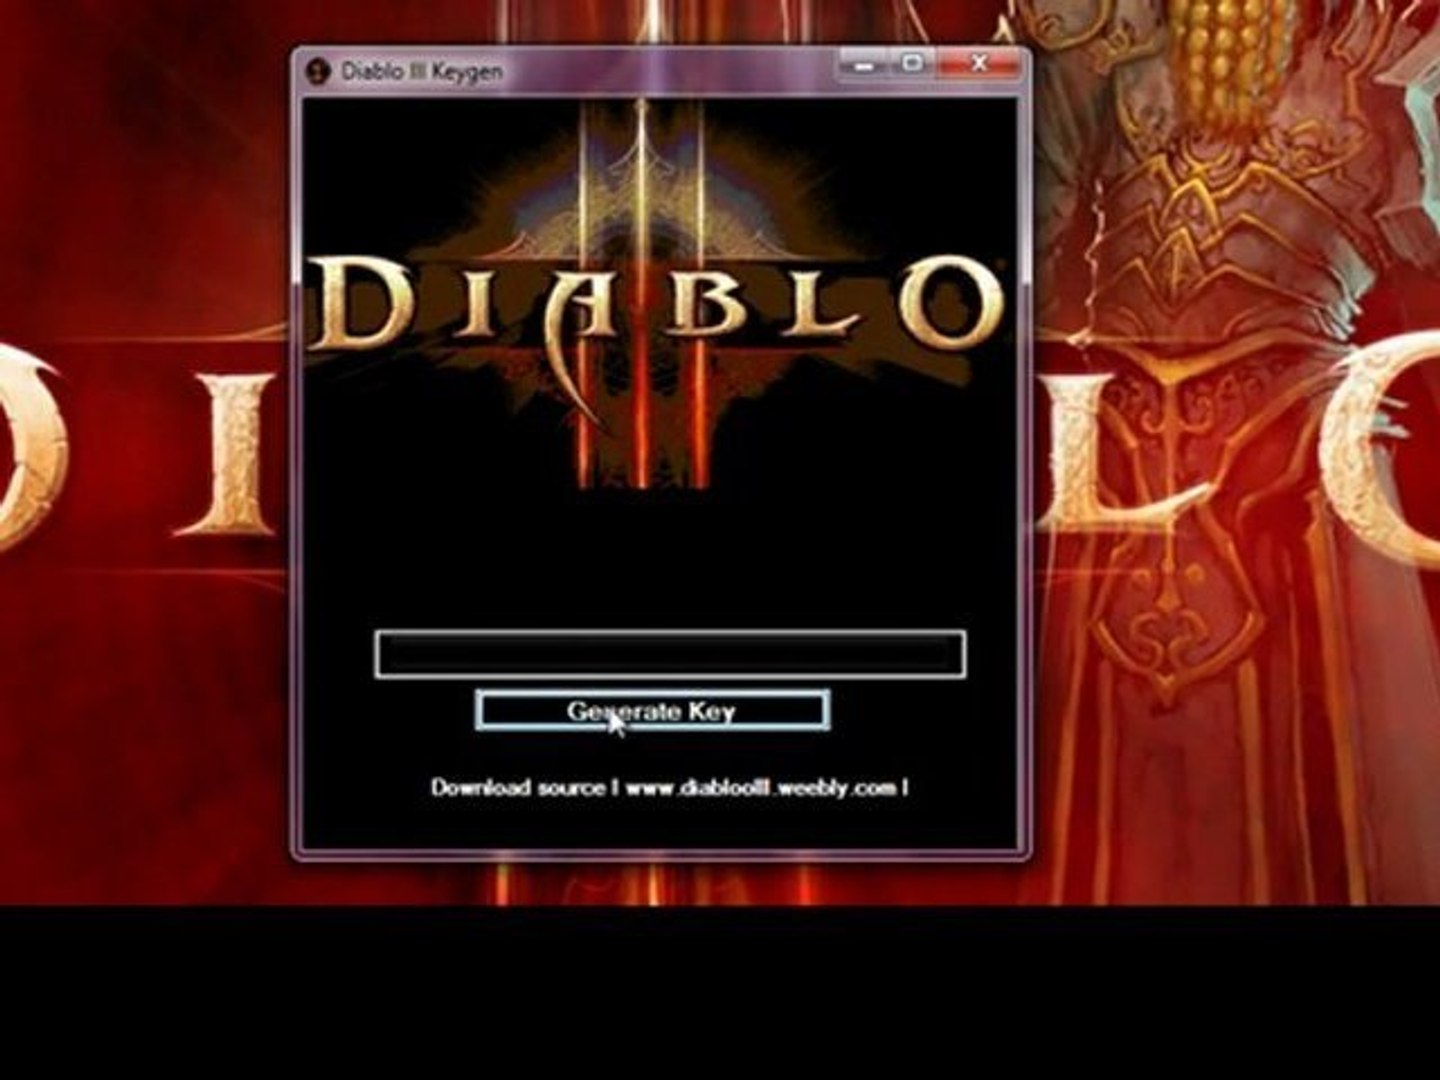 Diablo lll PC game free Keygen Download + Crack - video Dailymotion